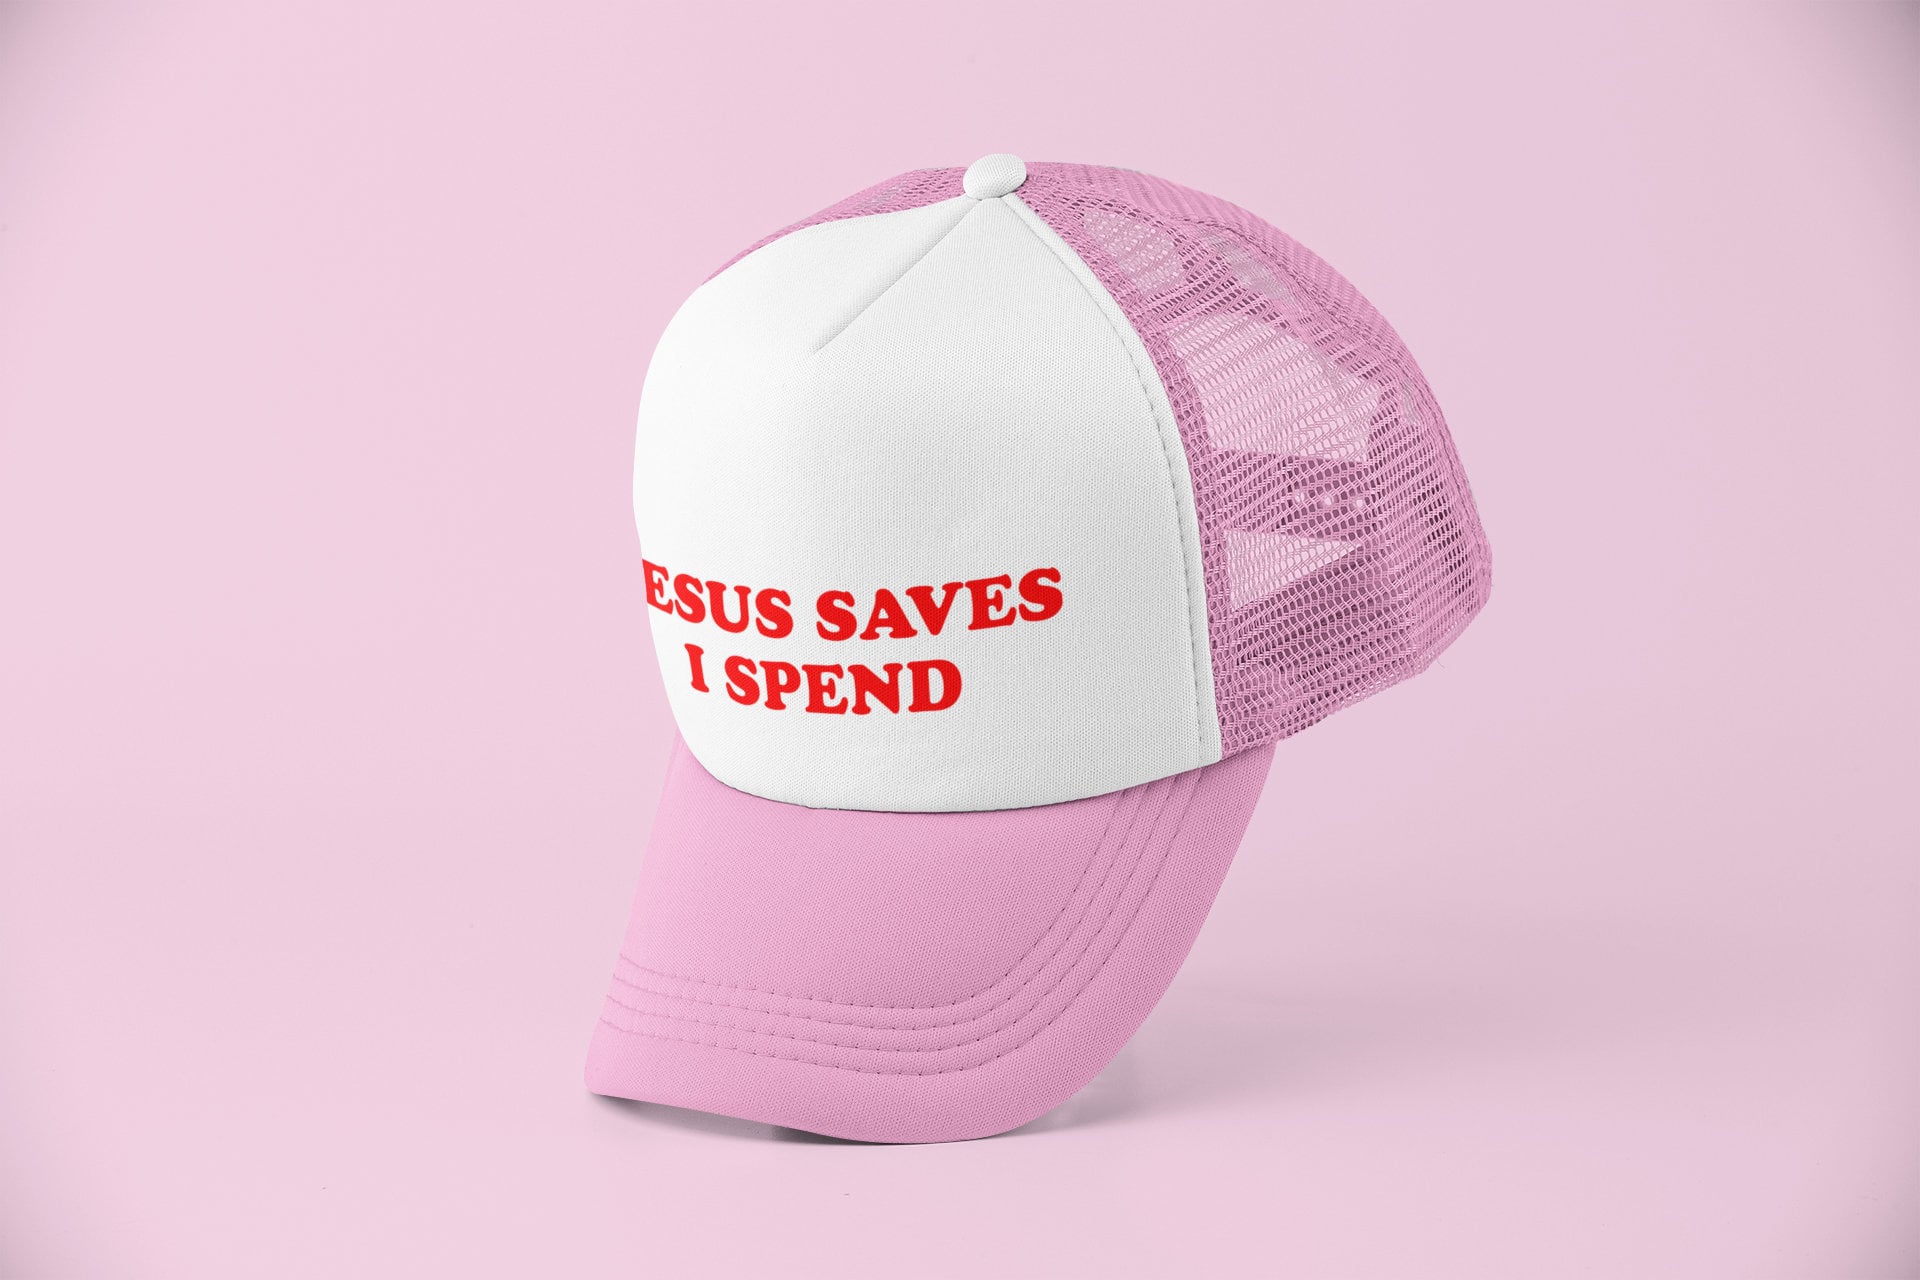 Best Deal for Funny Hats for Men Jesus Athletic Caps for Men's